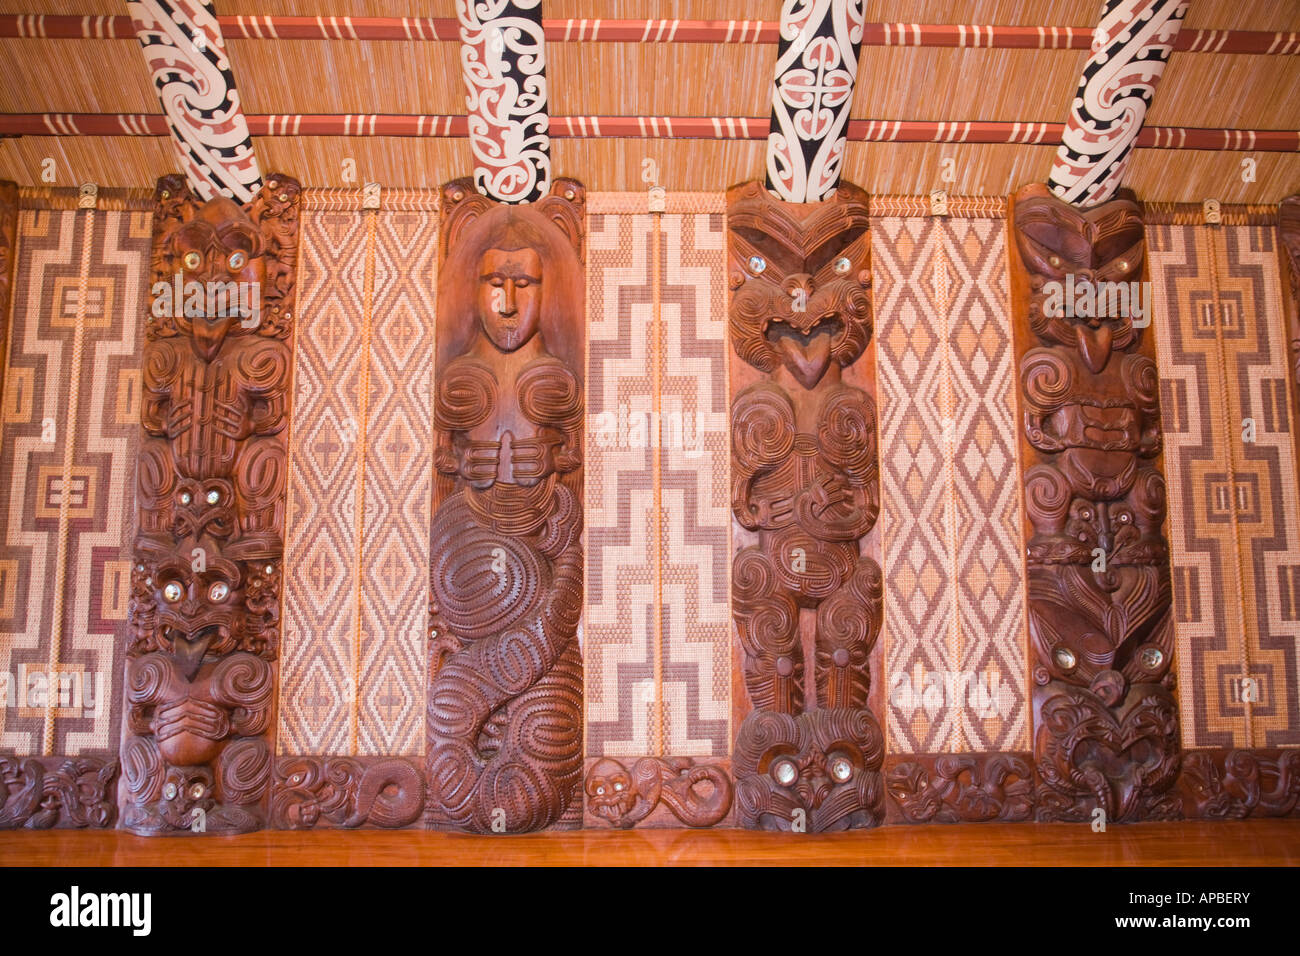 Maori geschnitztem Holz Design Detail innen Whare runanga marai Waitangi Treaty Grounds Haus der Begegnung in der nationalen Reserve Neuseeland Stockfoto